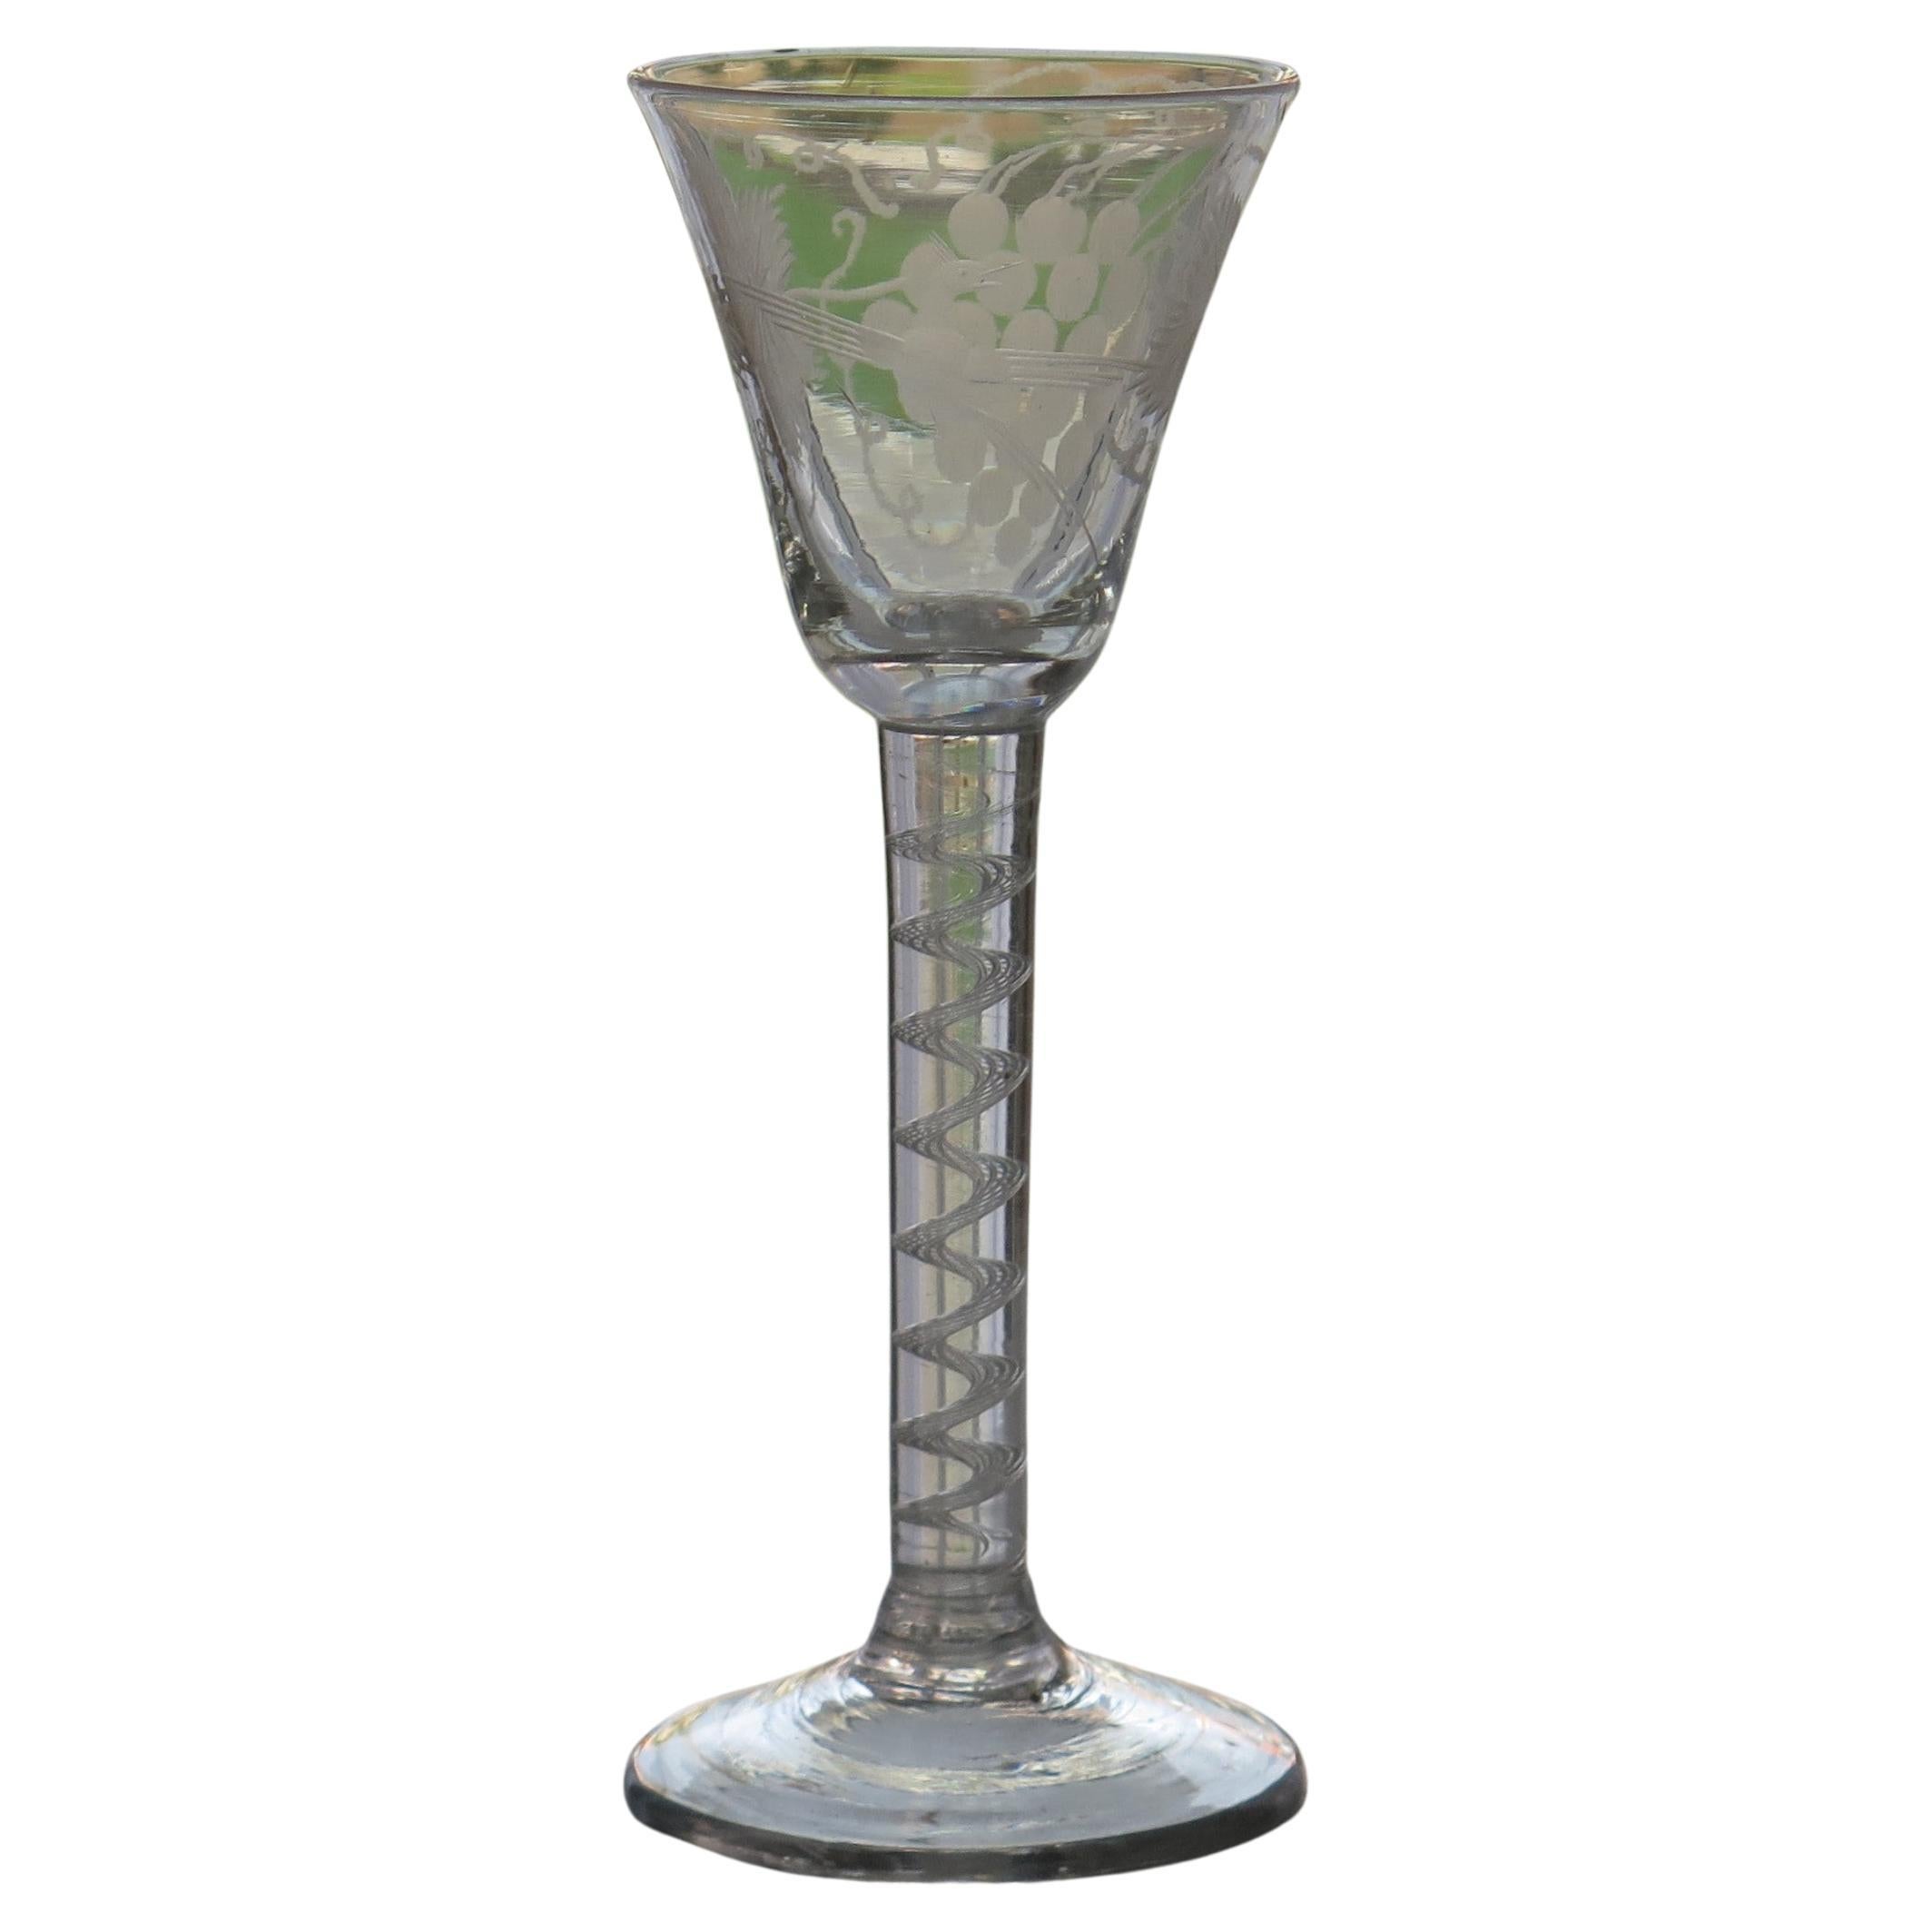 18thC Georgian Wine Drinking Glass Engraved Bowl Cotton Twist Stem, Circa 1750